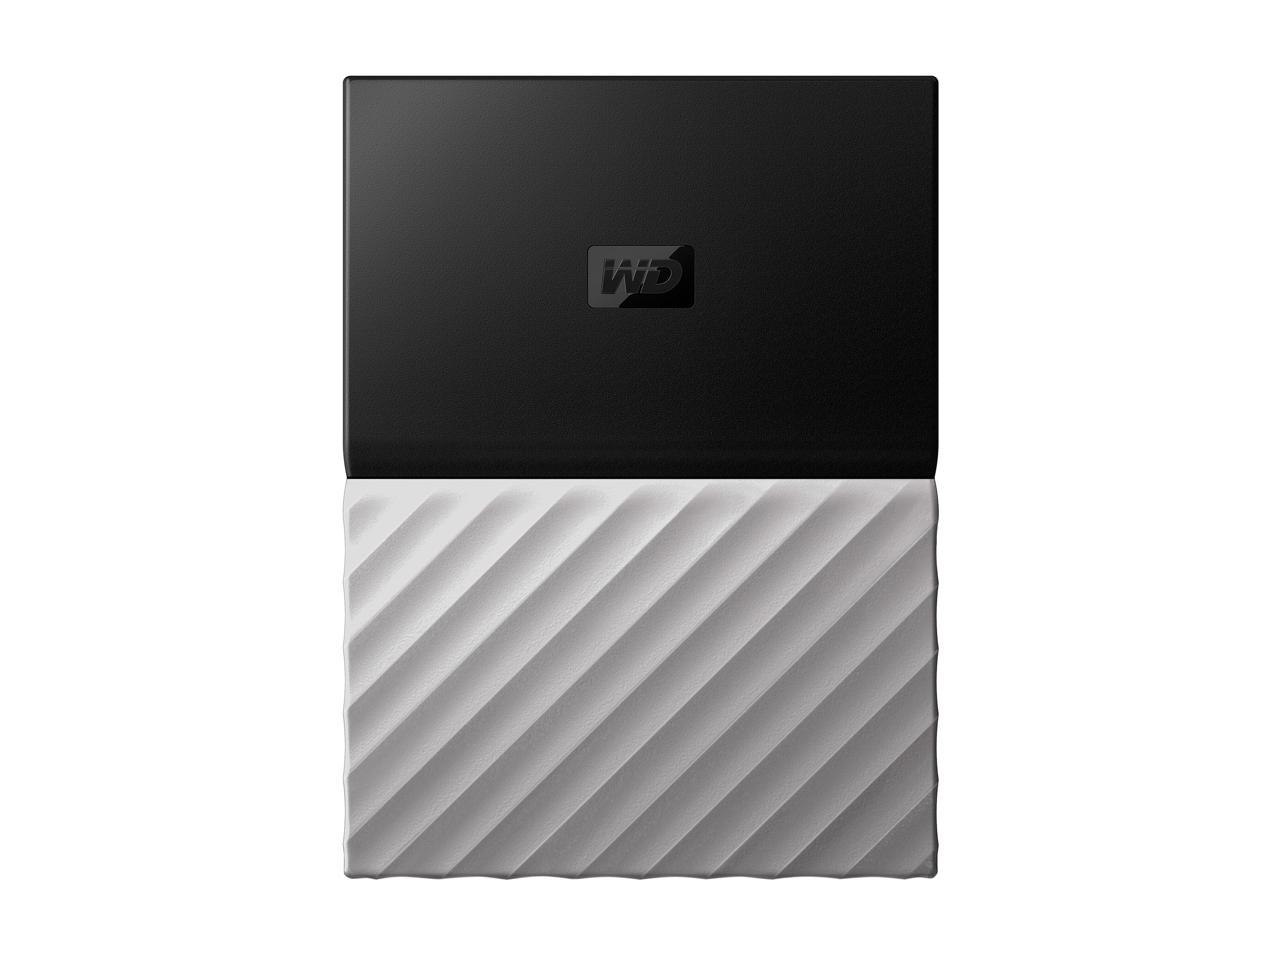 WD 3TB My Passport Ultra Portable Storage with Metal Finish USB 3.0 Model WDBFKT0030BGY-WESN Black - Gray